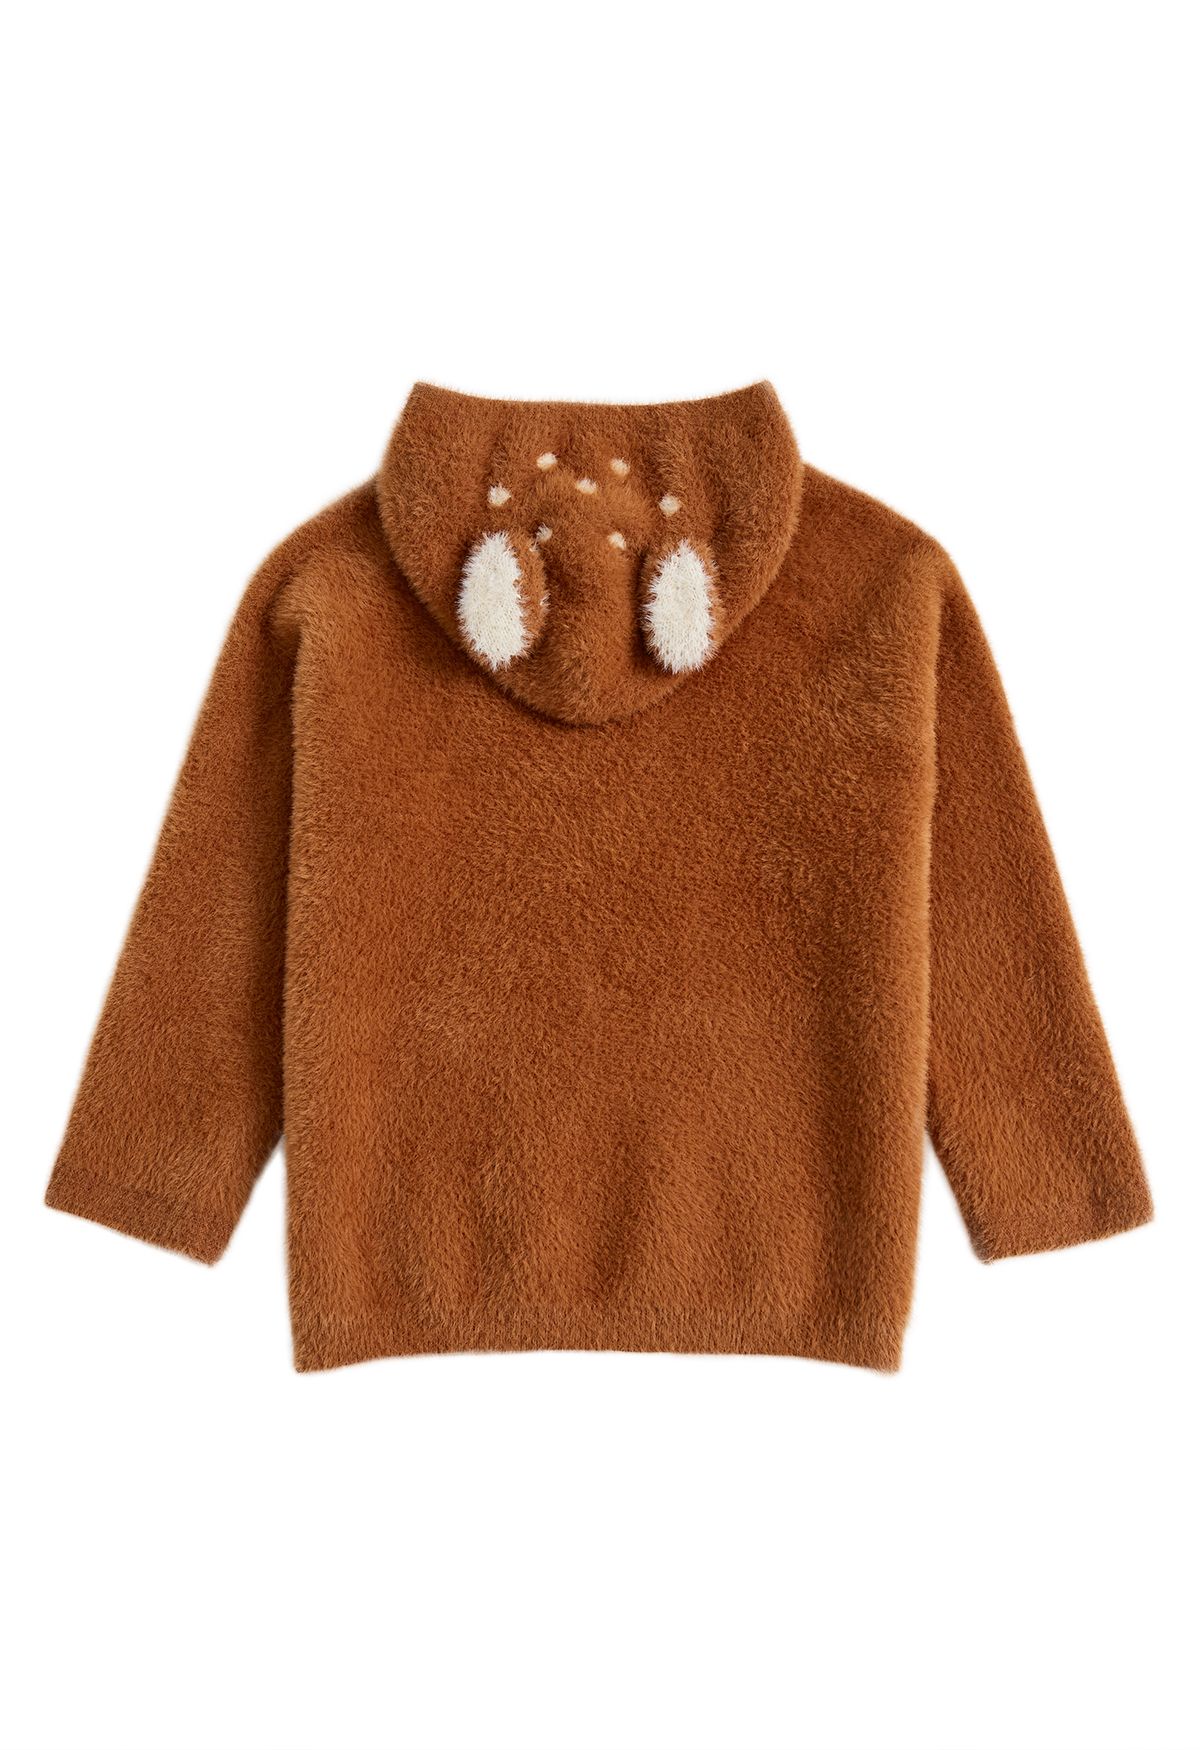 Sika Deer Fuzzy Knit Hooded Sweater in Caramel Pour Enfants